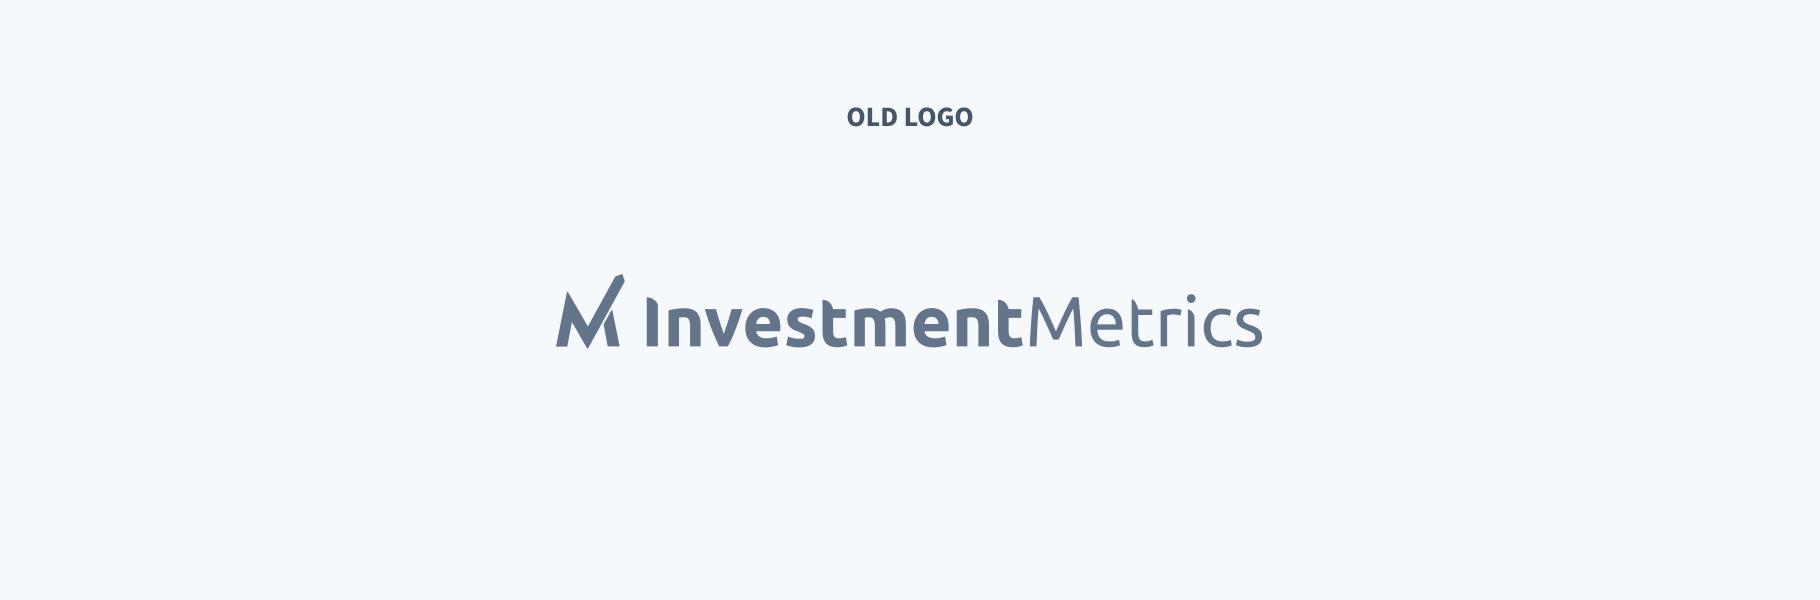 Old Investment Metrics Logo